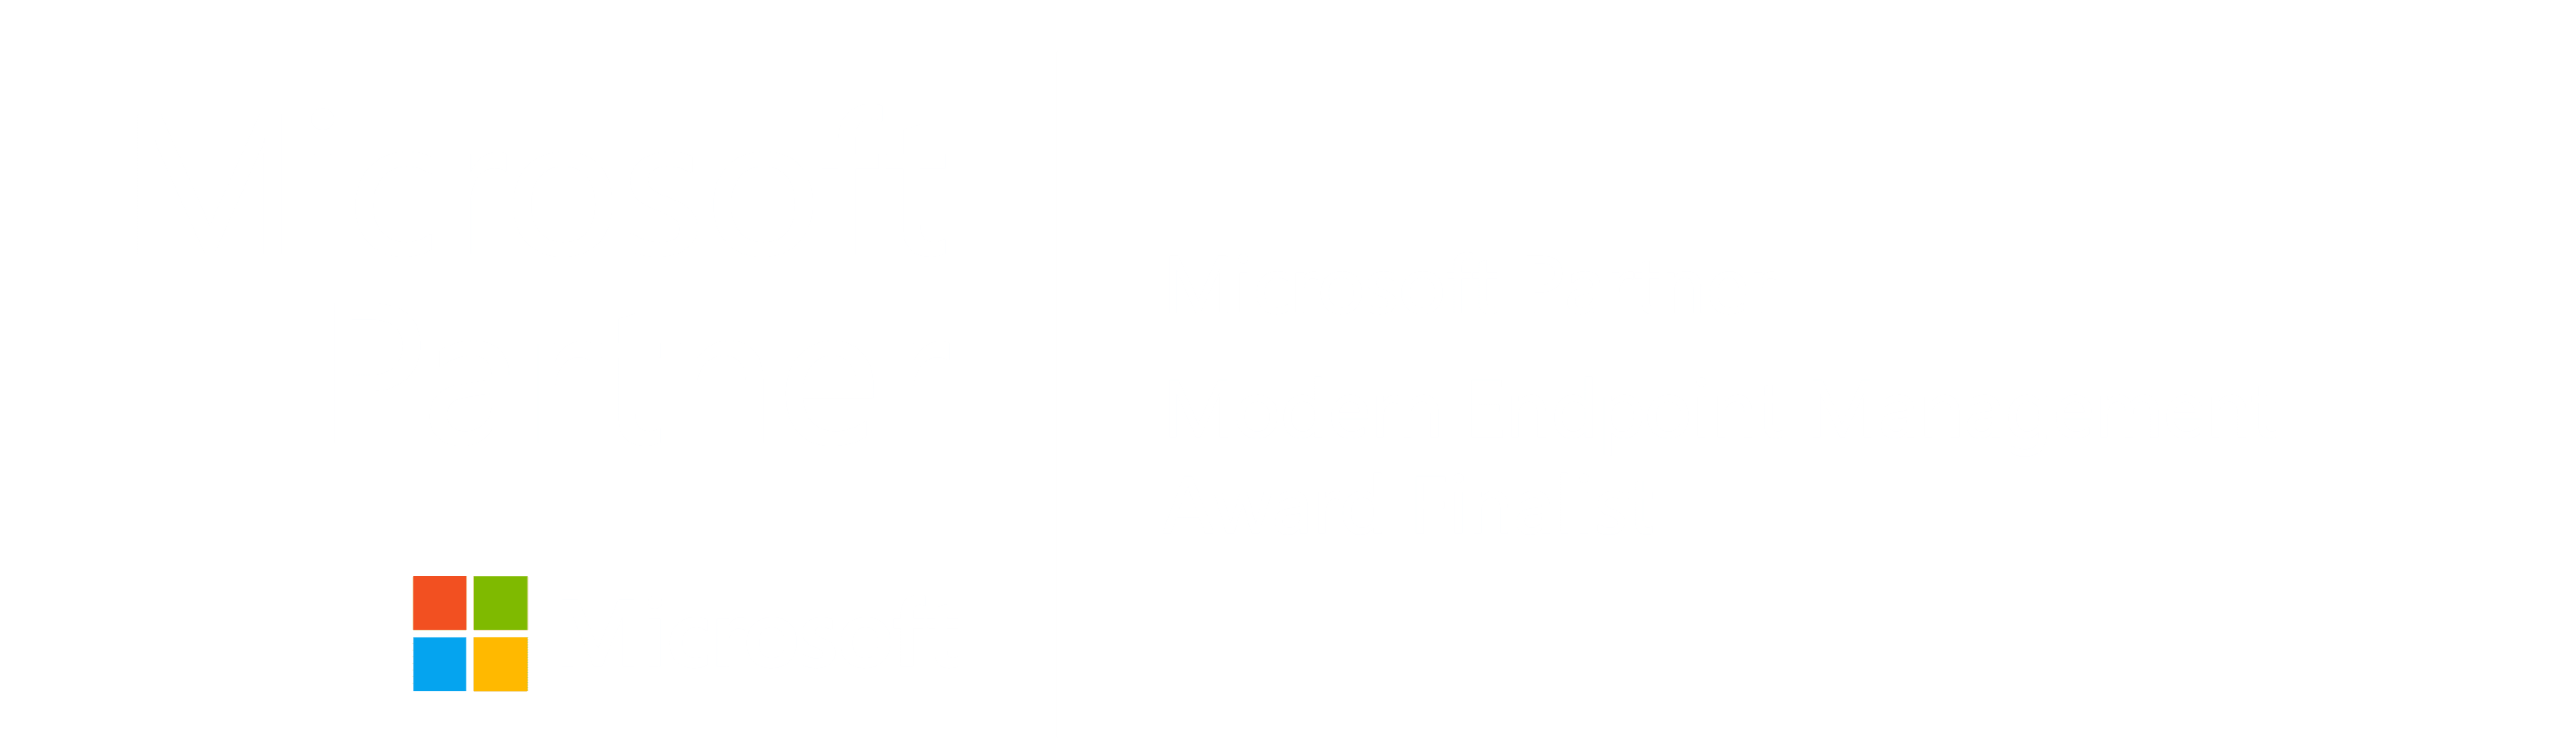 Microsoft Partner Award Finalist